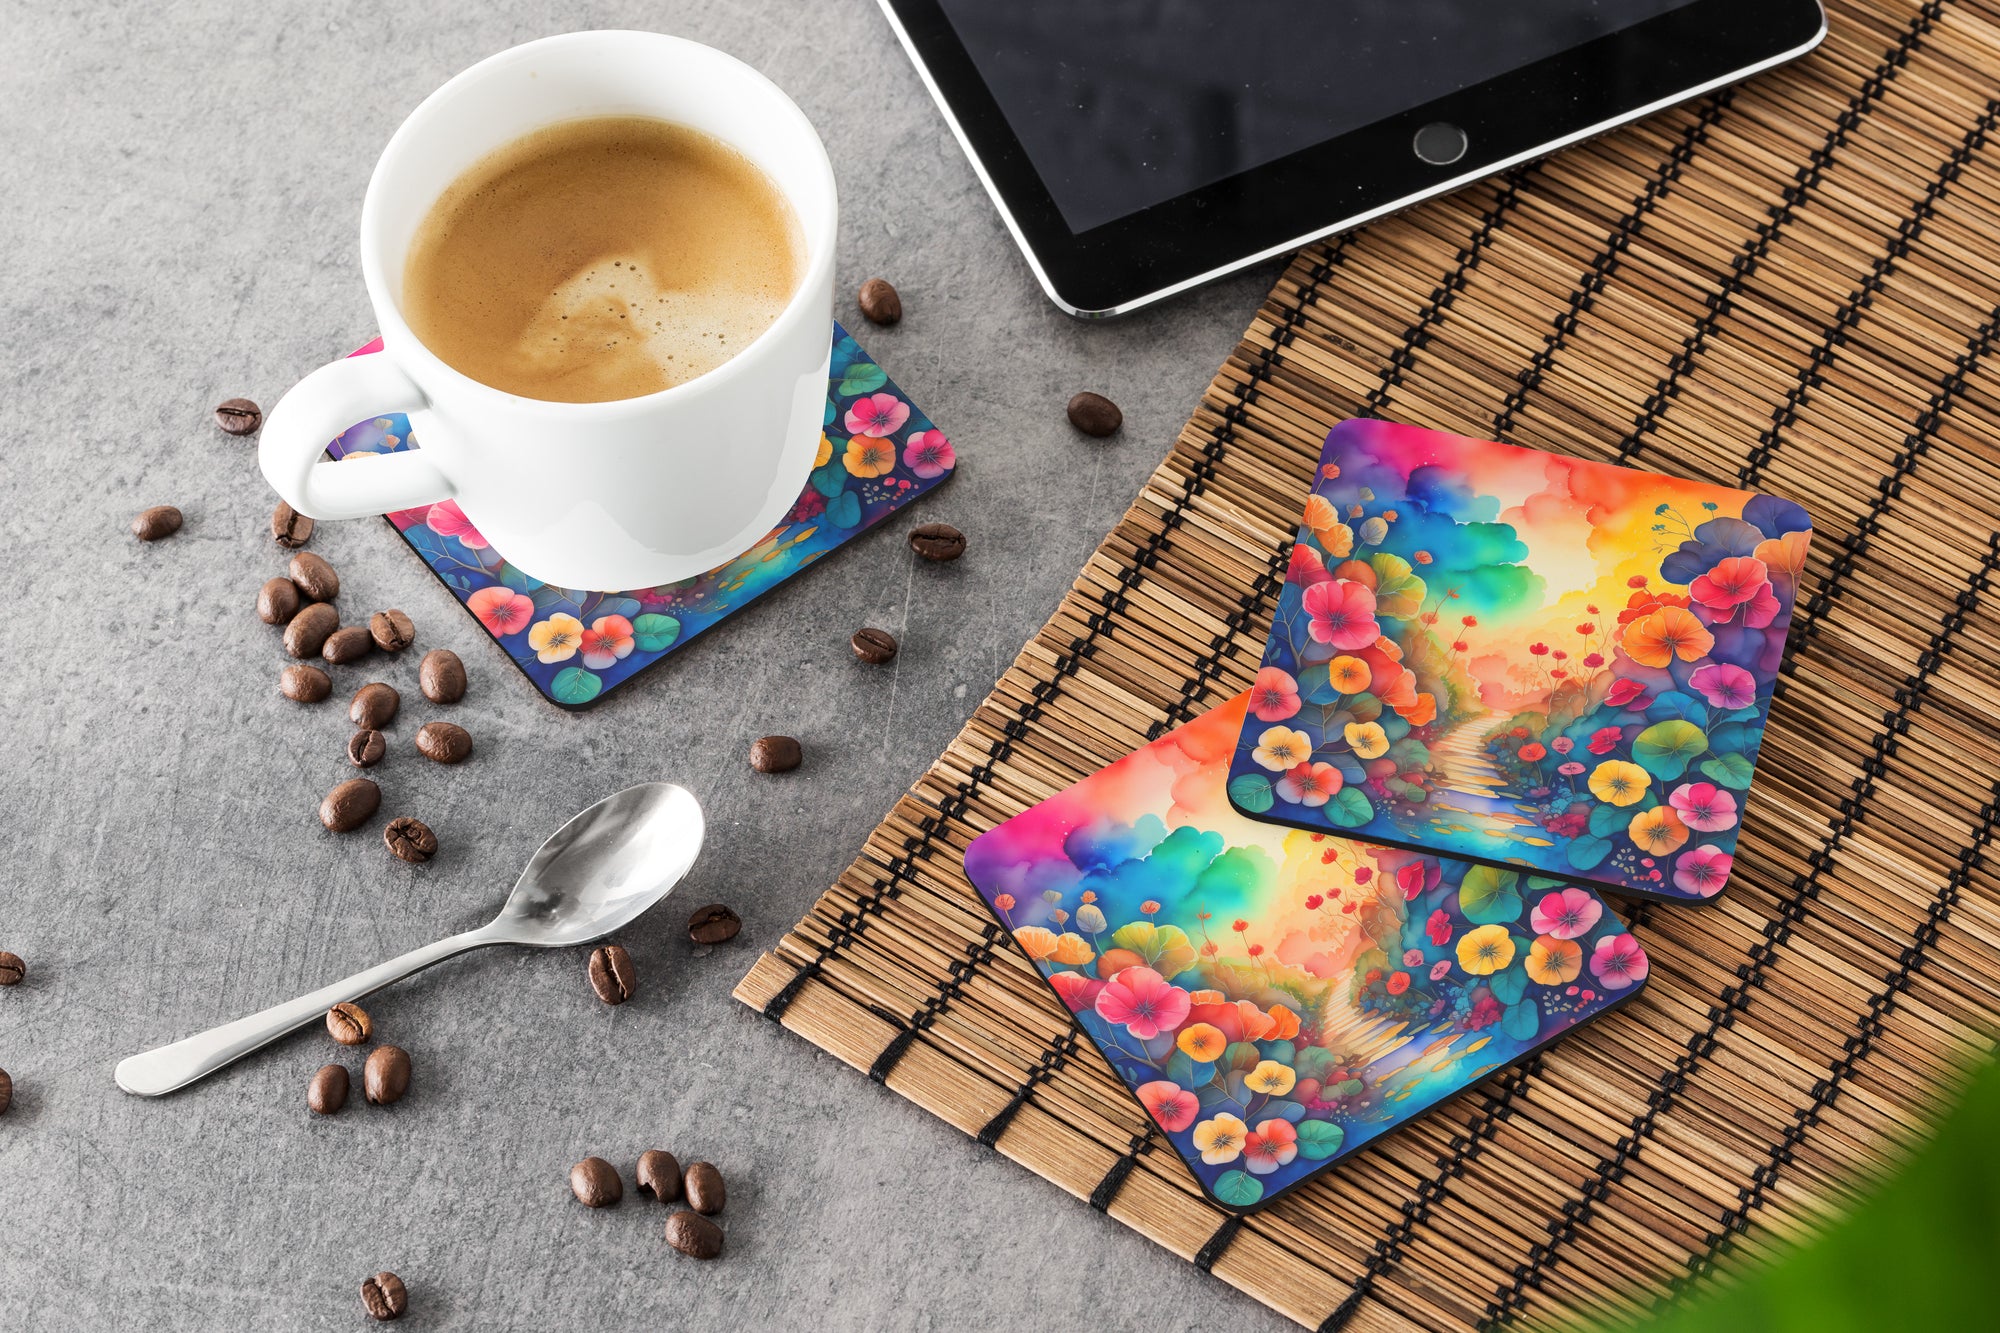 Colorful Begonias Foam Coaster Set of 4